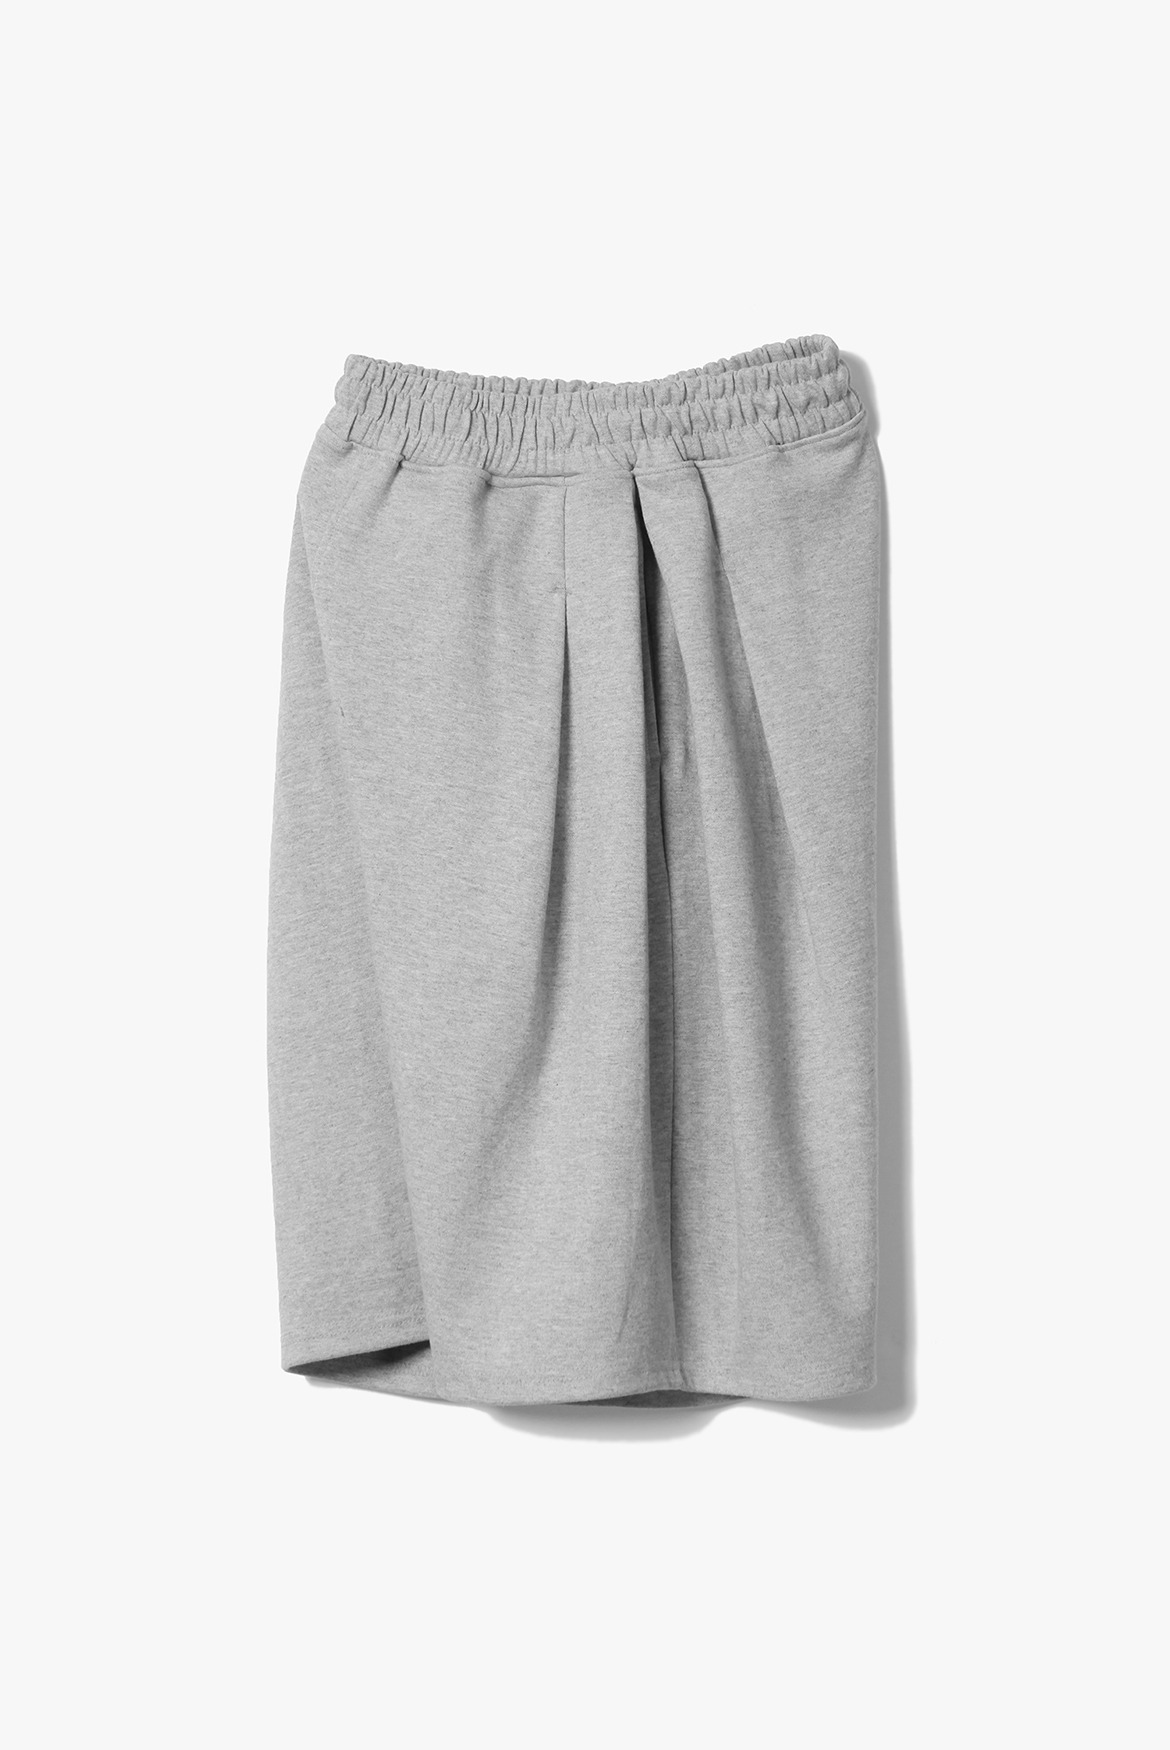 Deep 4 Tuck Sweat Shorts [Grey]